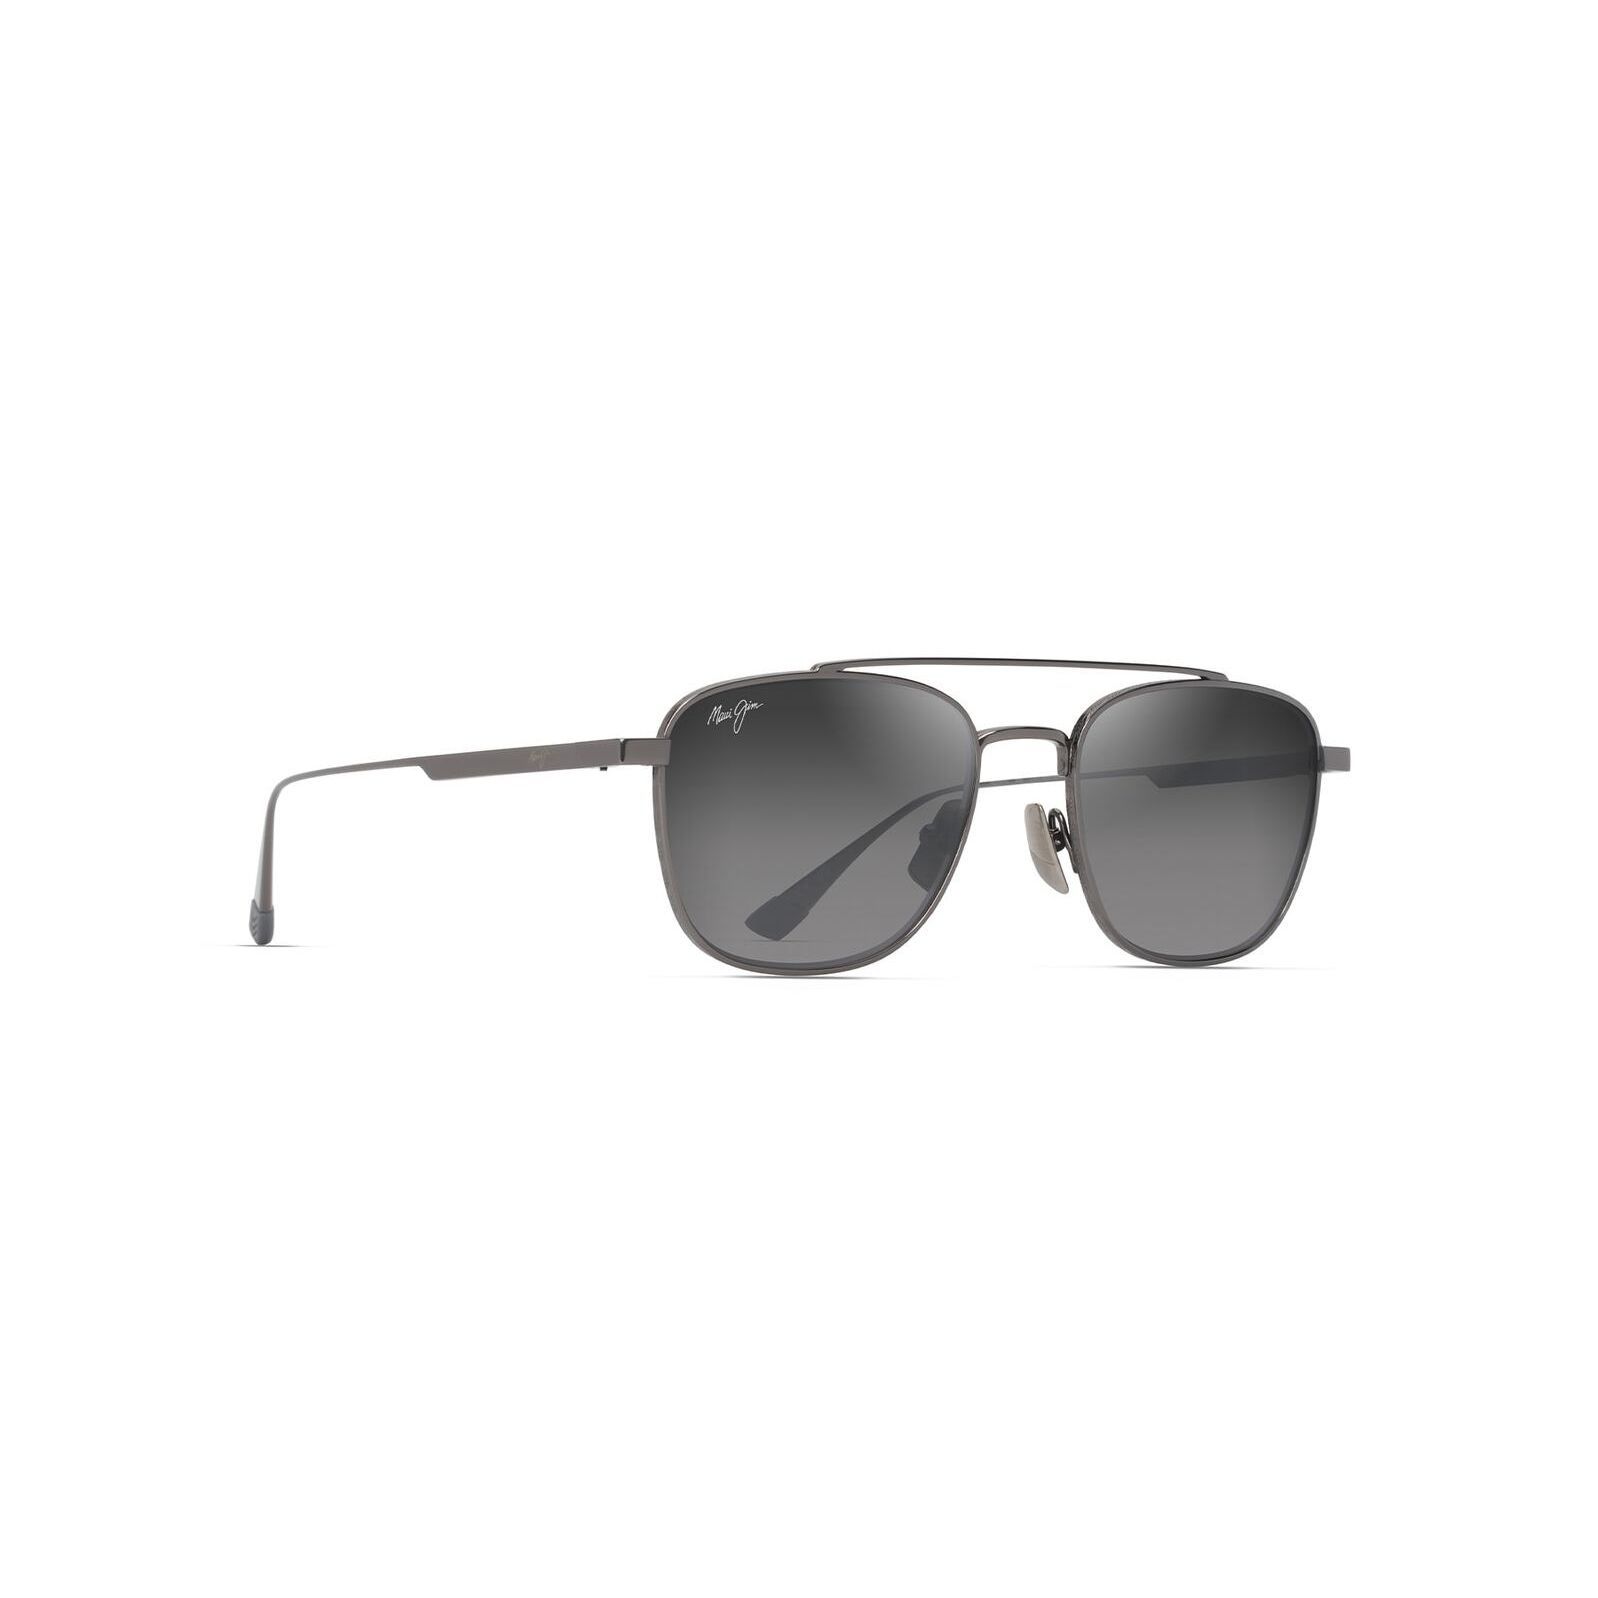 KAHANA GS640 Pilot Sunglasses 17 - size 53